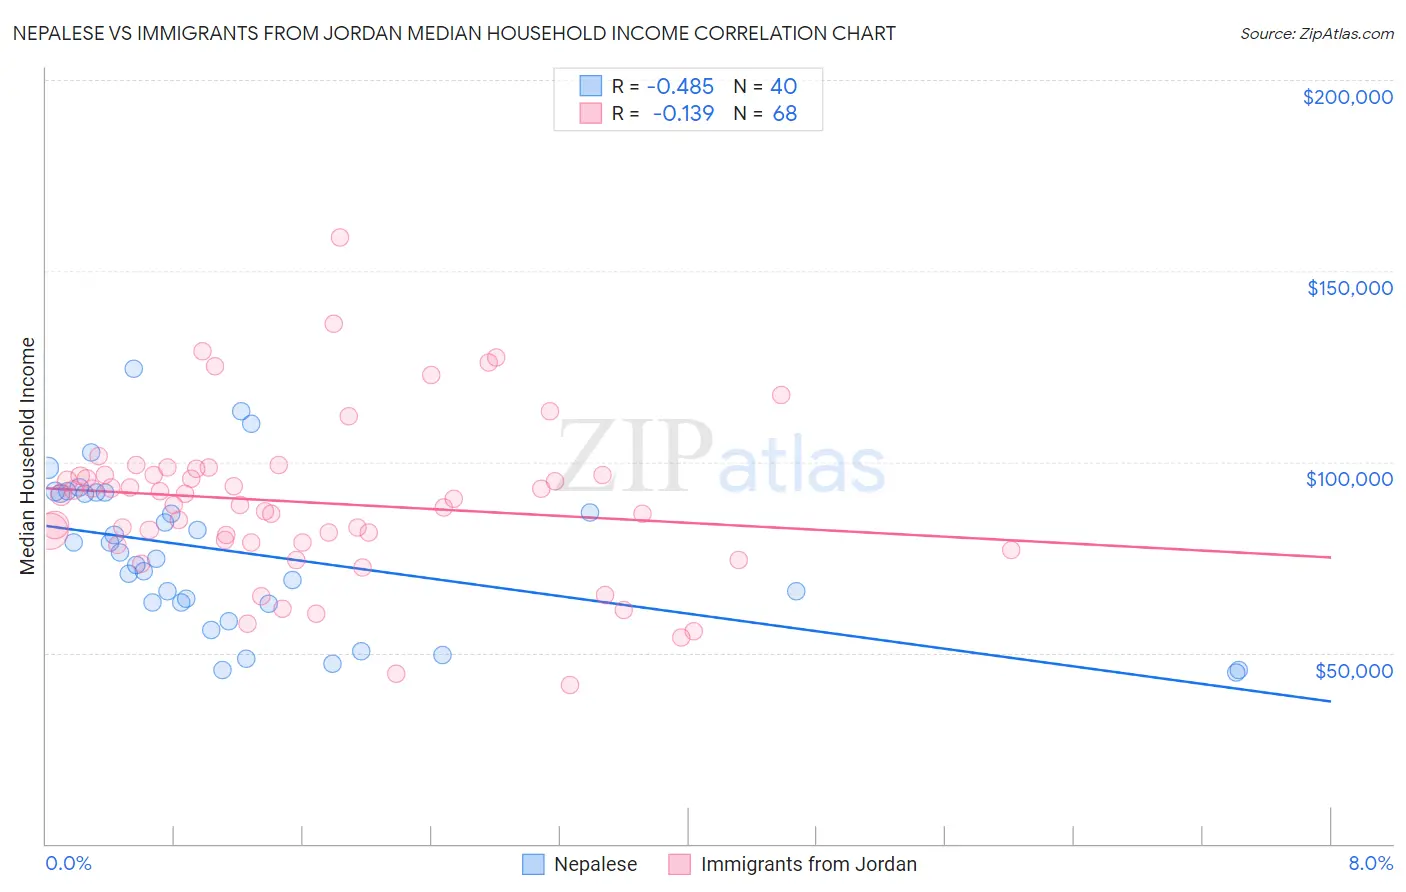 Nepalese vs Immigrants from Jordan Median Household Income